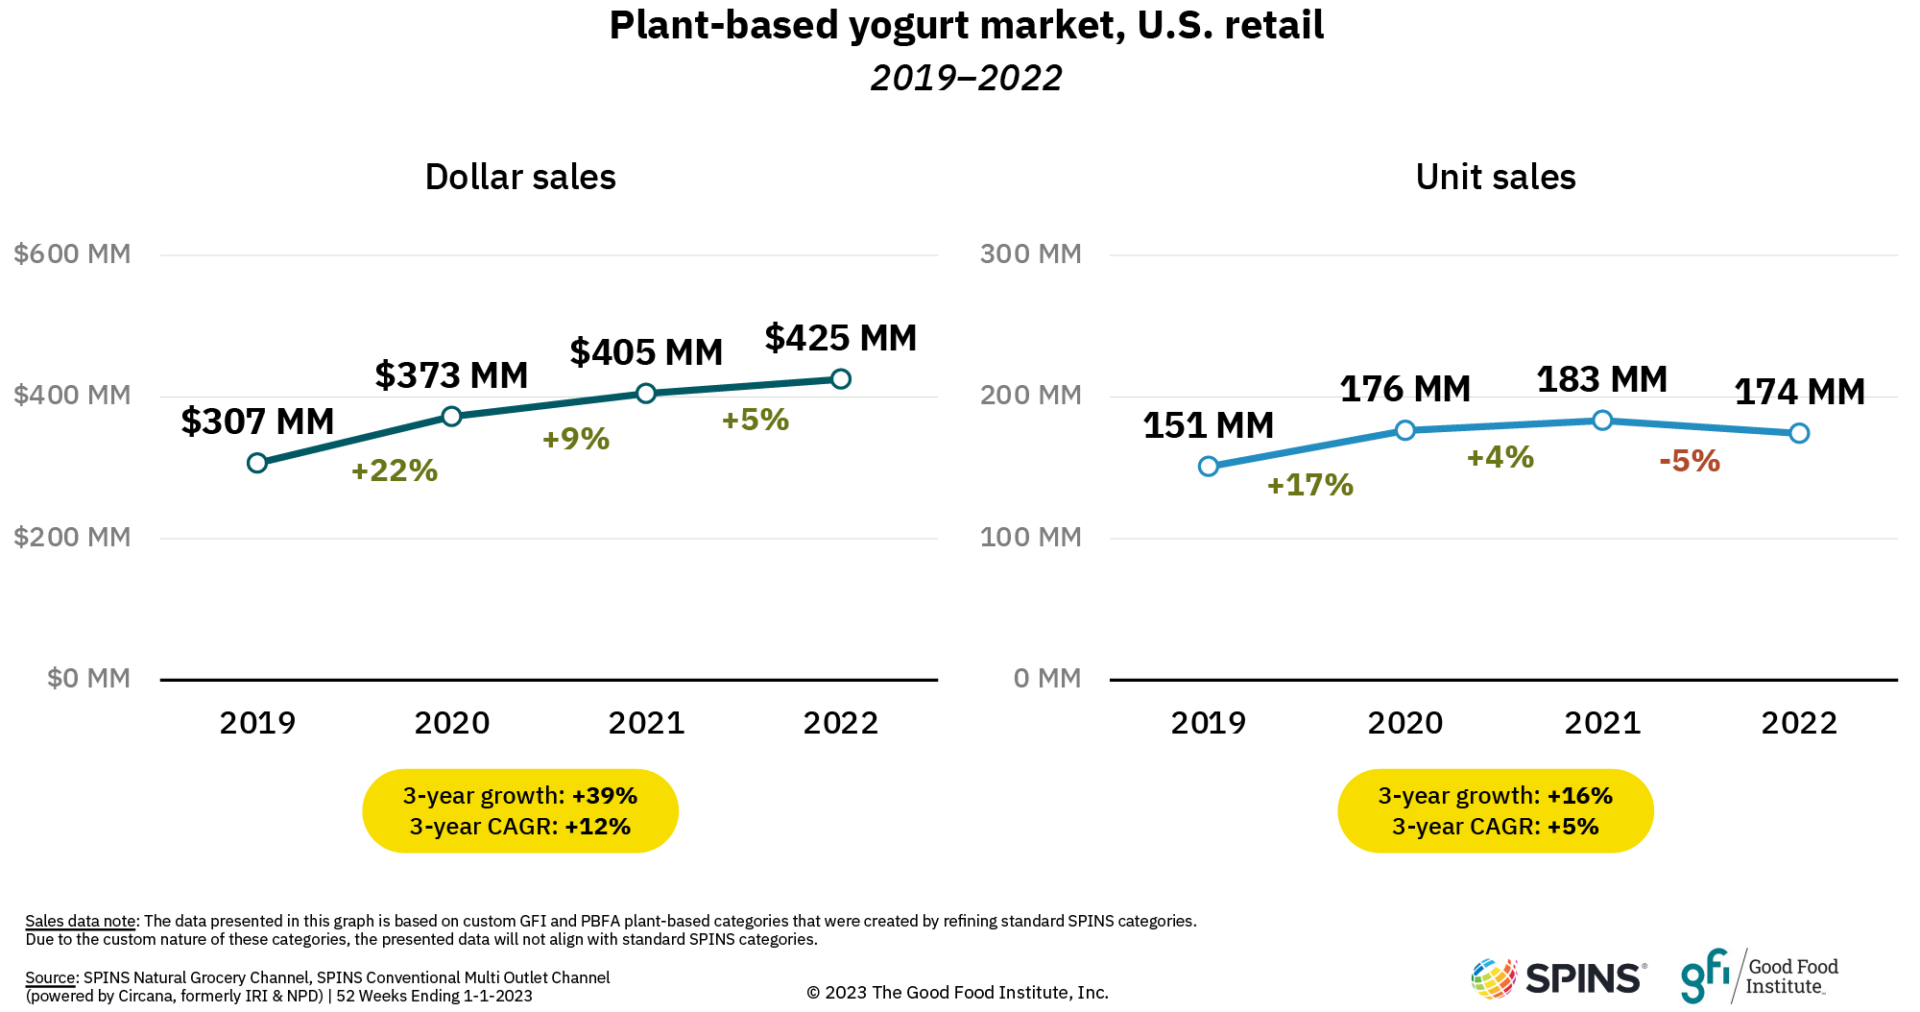 Summary of plant-based yogurt sales data